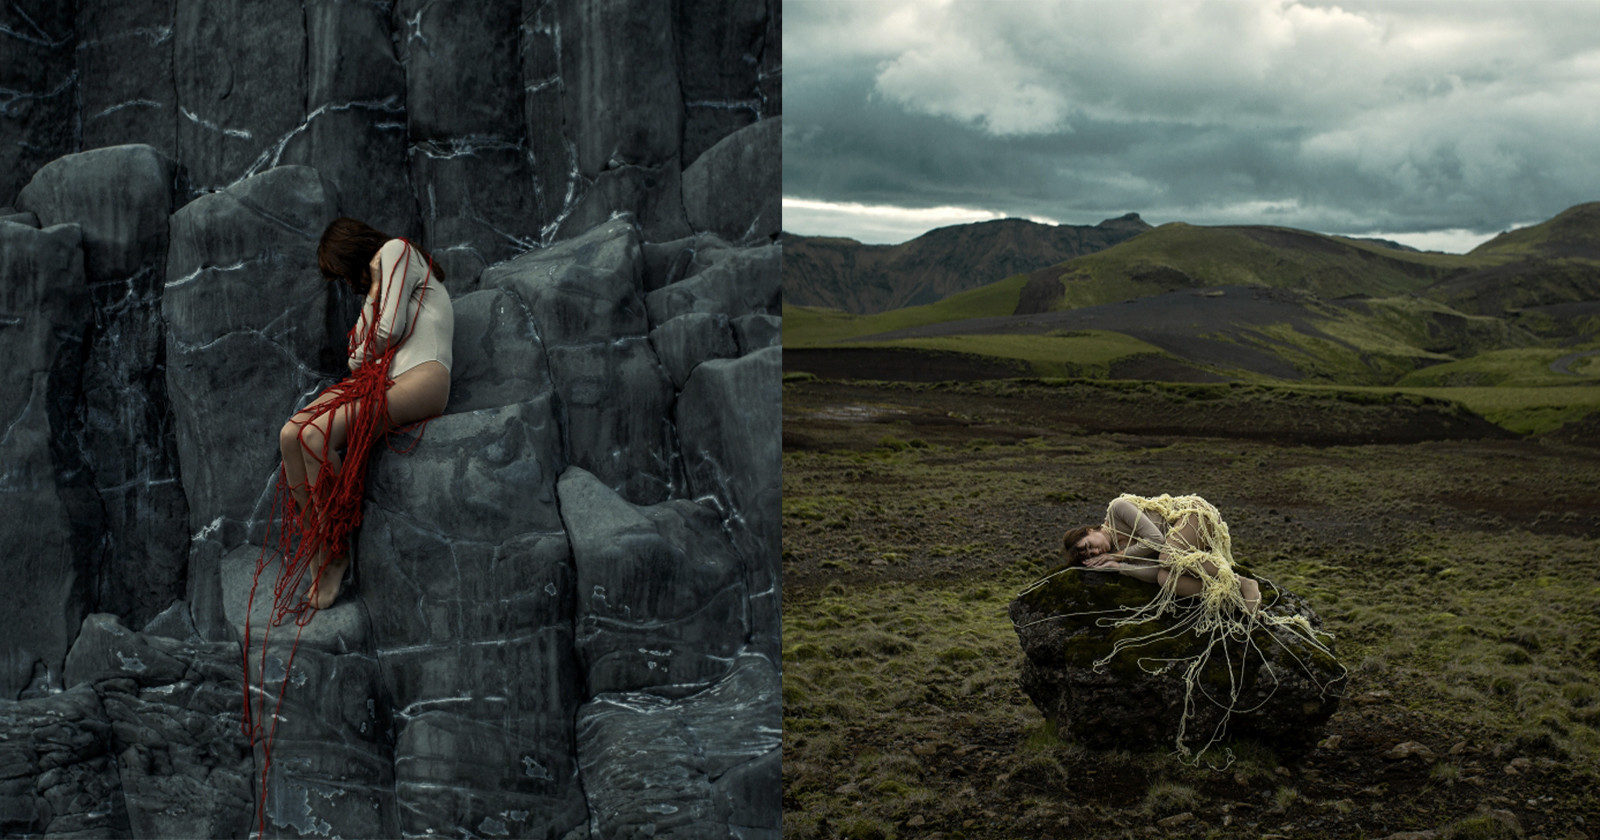 Icelandic Self-Portrait Series Helped Artist Out of Postpartum Depression